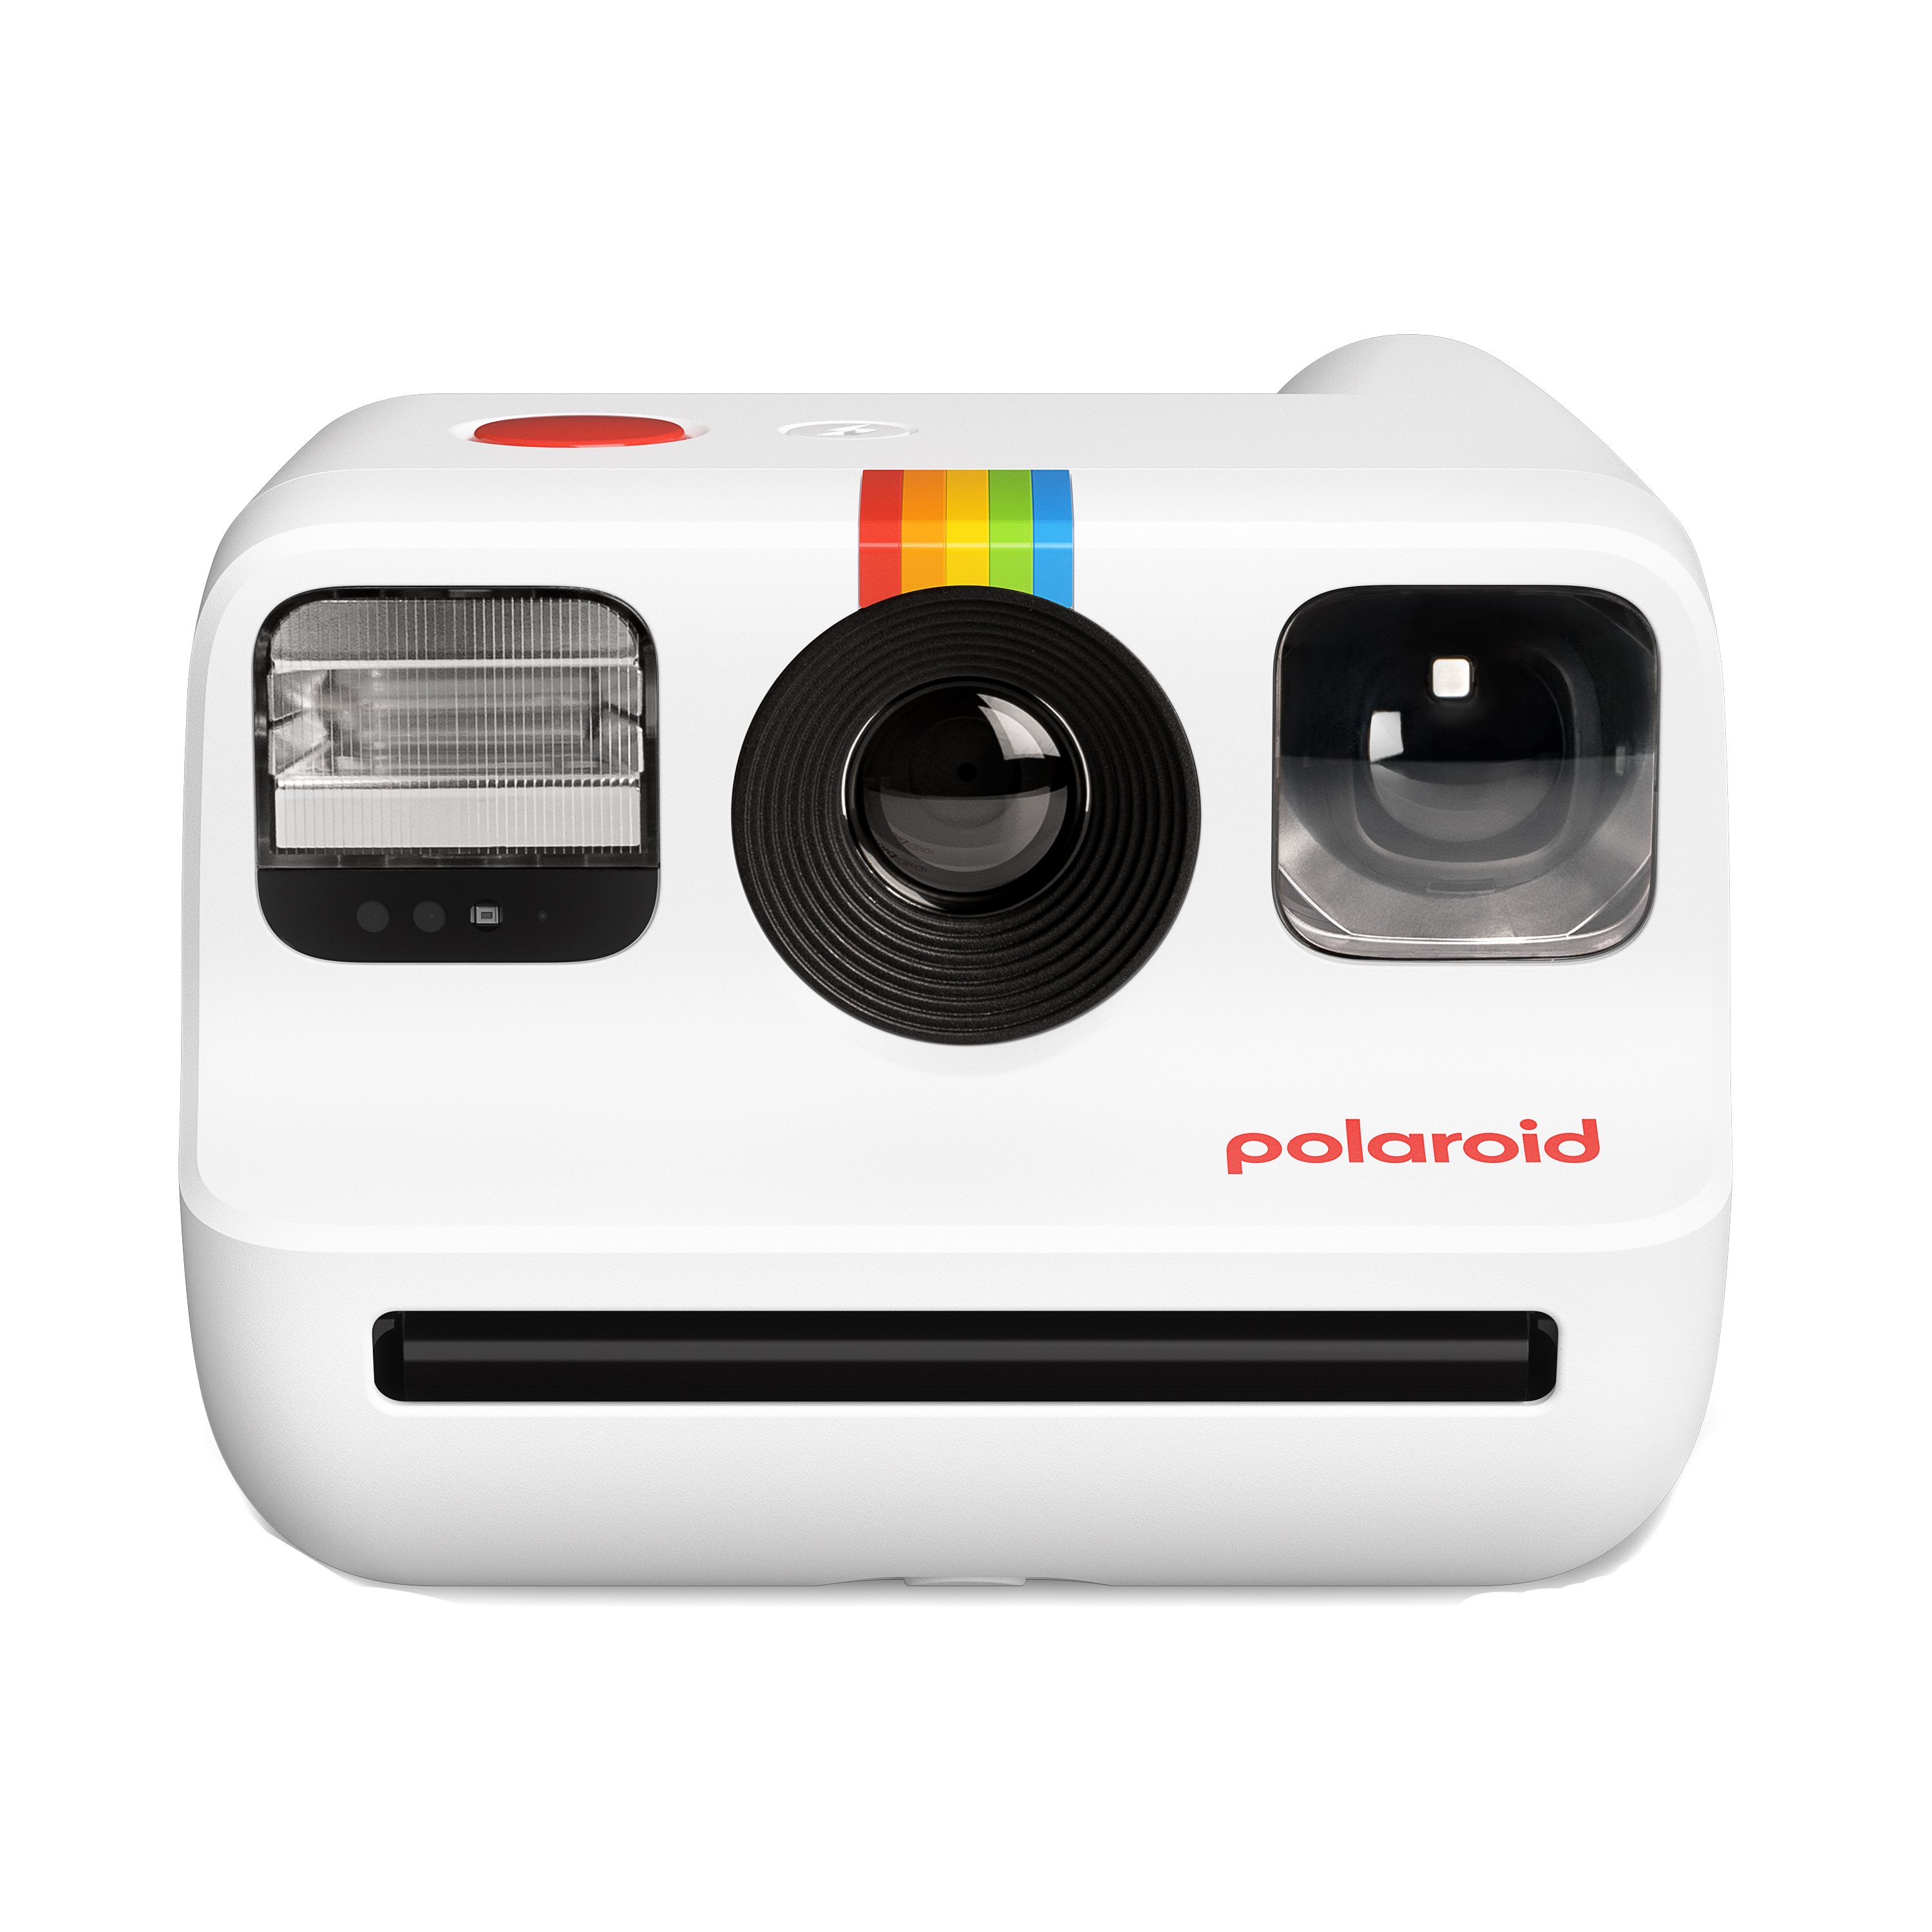 Polaroid Go Instant Camera Generation 2 - White - image 2 of 8